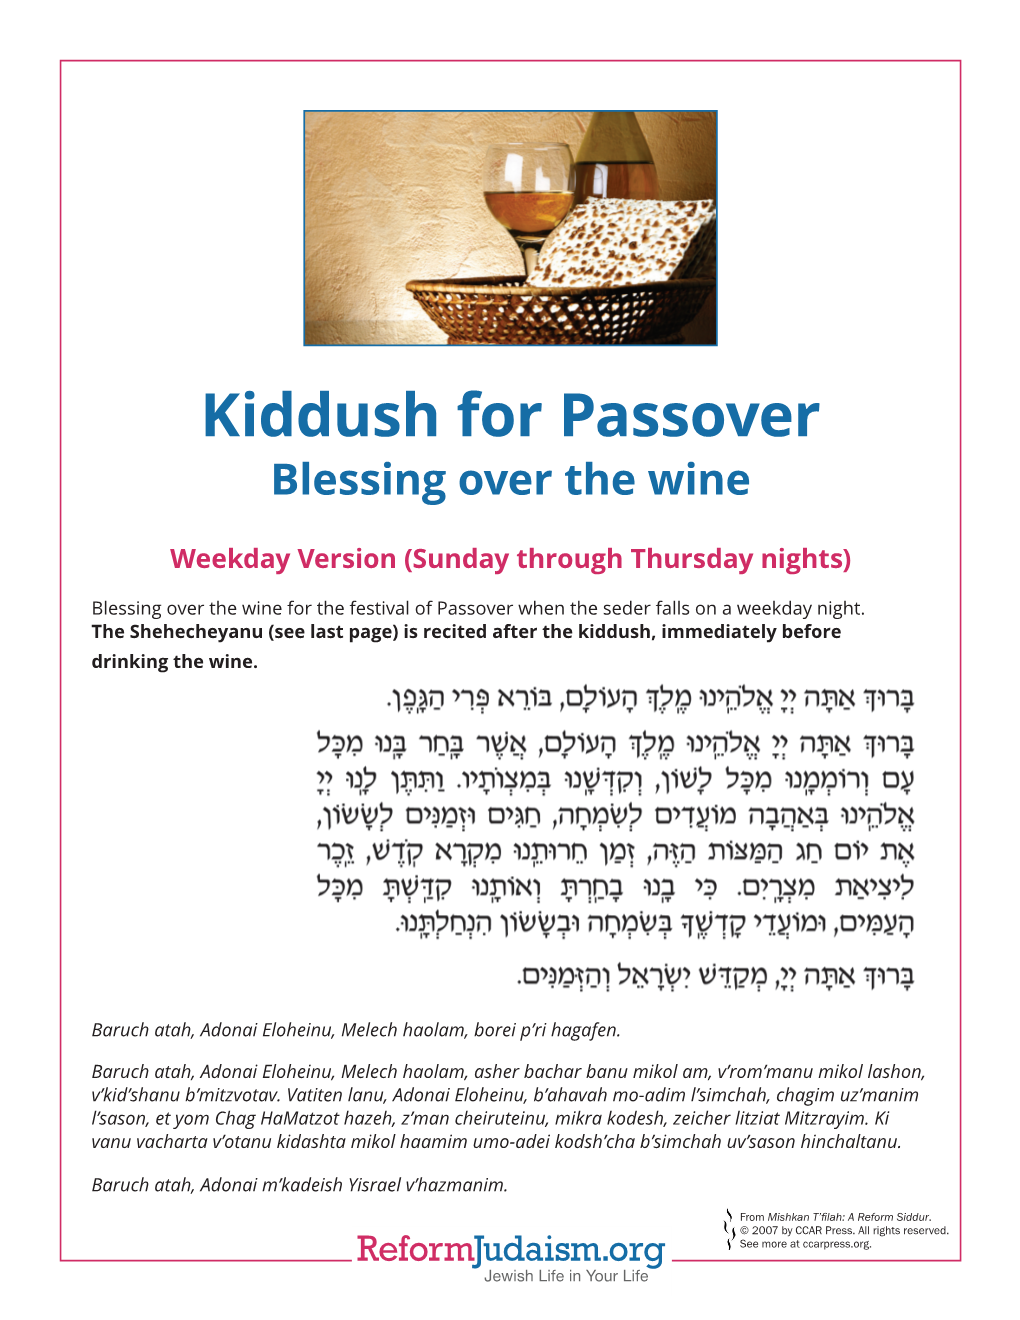 Kiddush for Passover Blessing Over the Wine